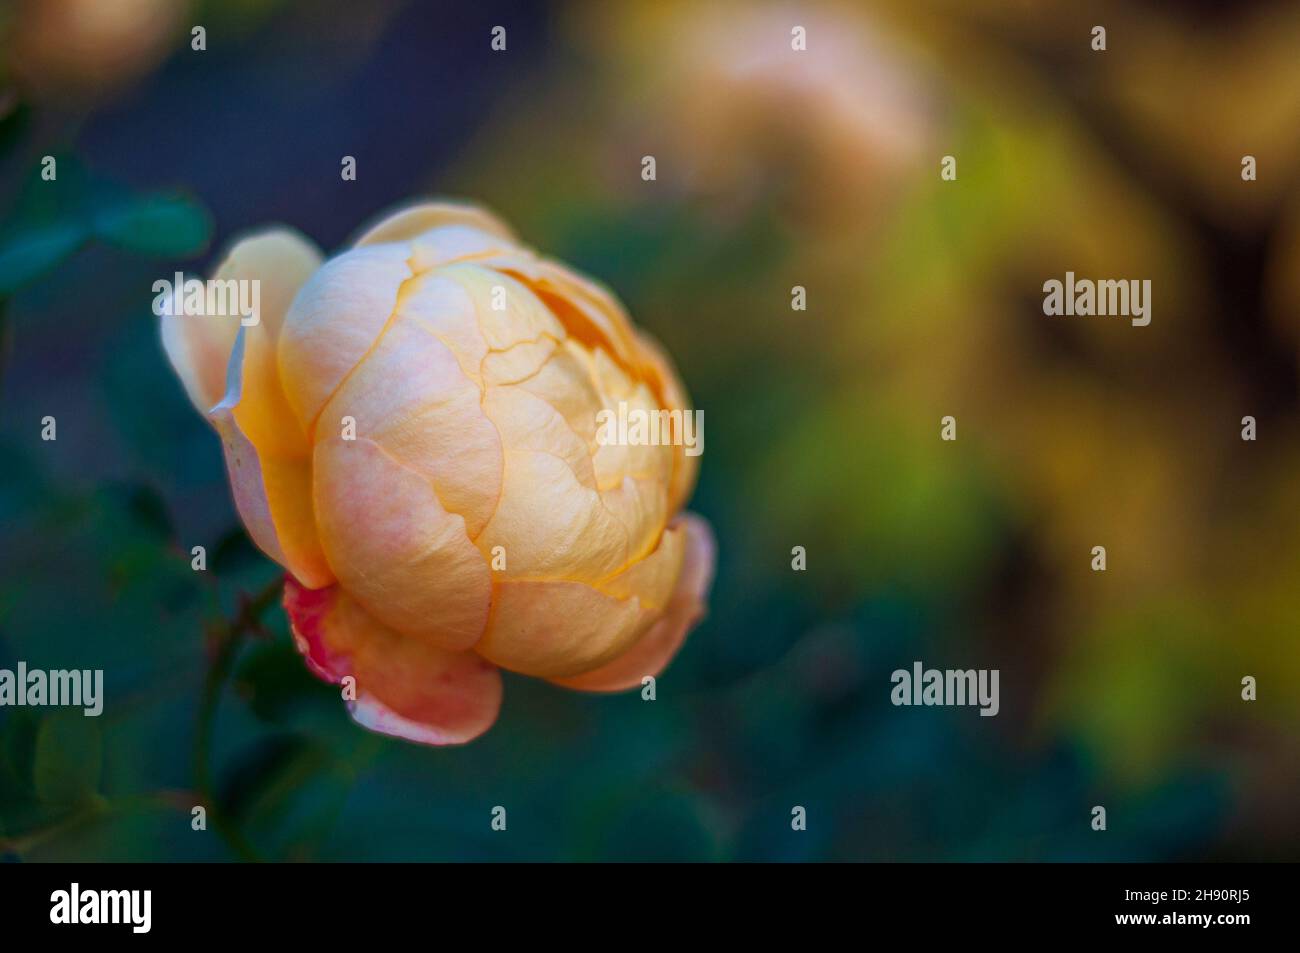 Half-opened flower on defocused background. Rose by David Austin Lady of Shalott. Light yellow rose Stock Photo